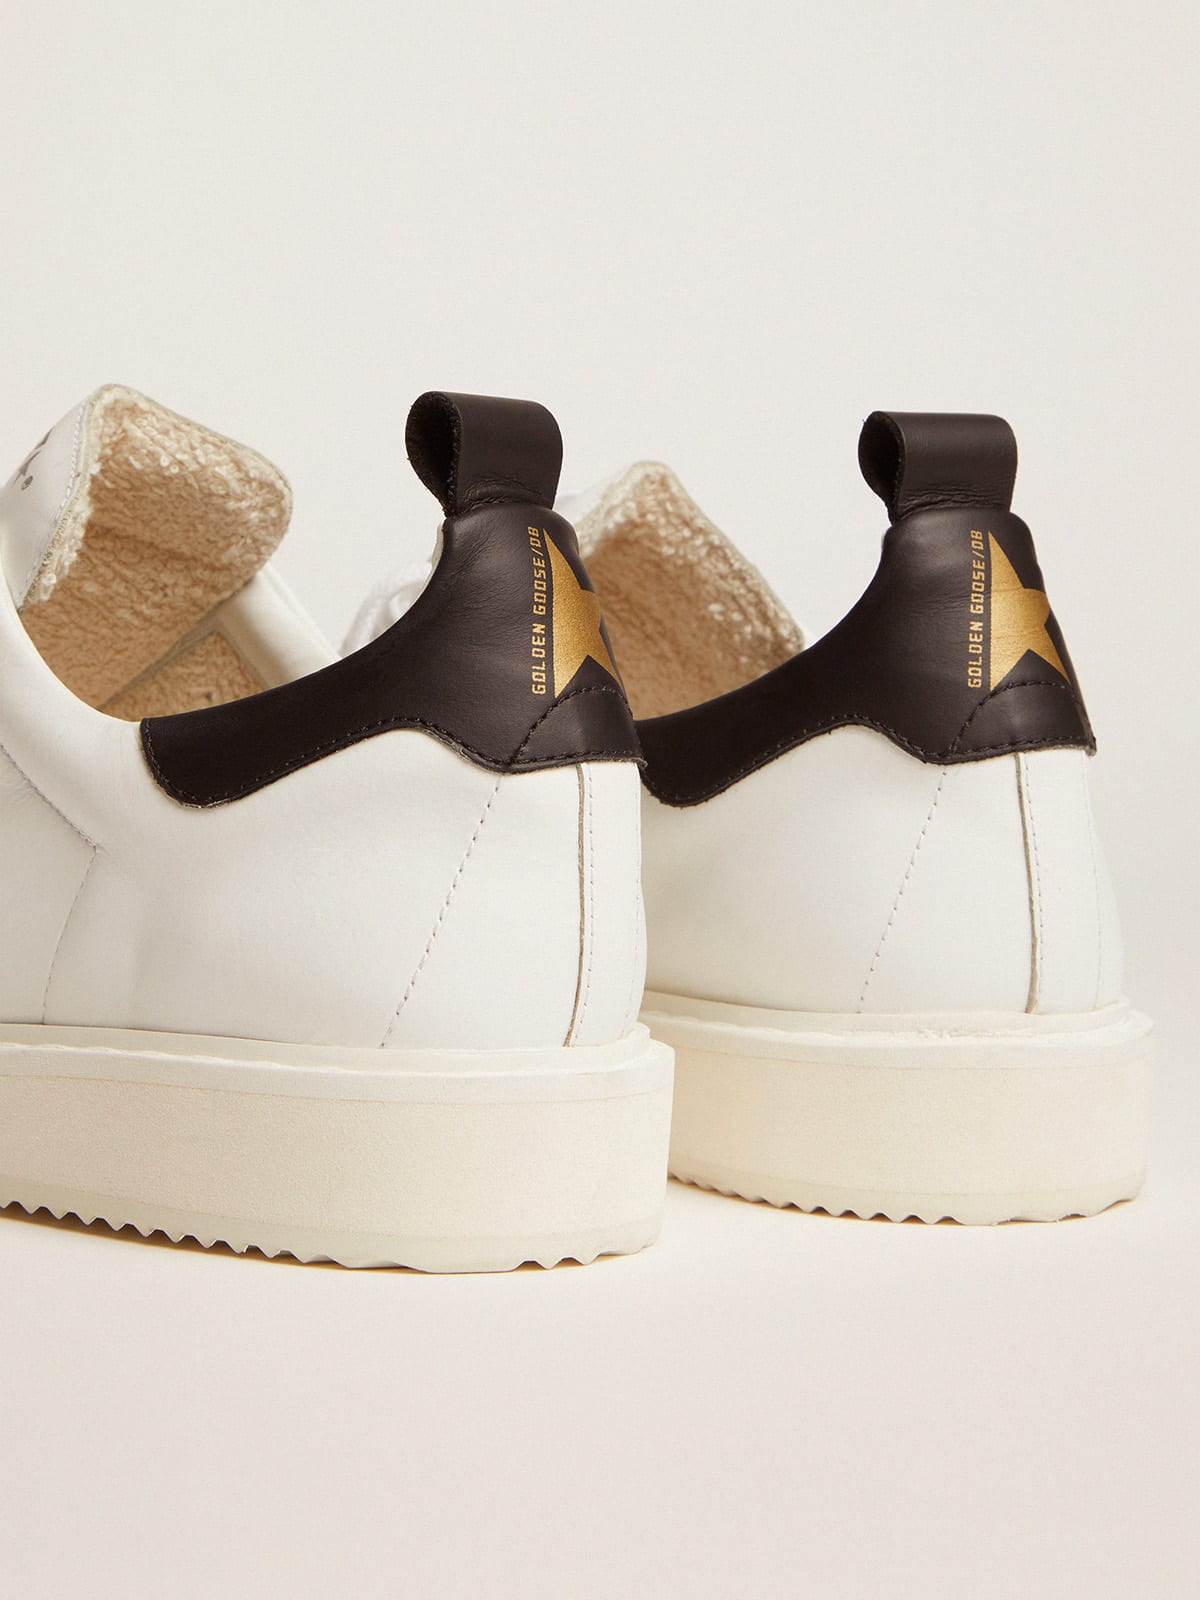 Golden Goose - Starter sneakers in leather with black heel tab in 